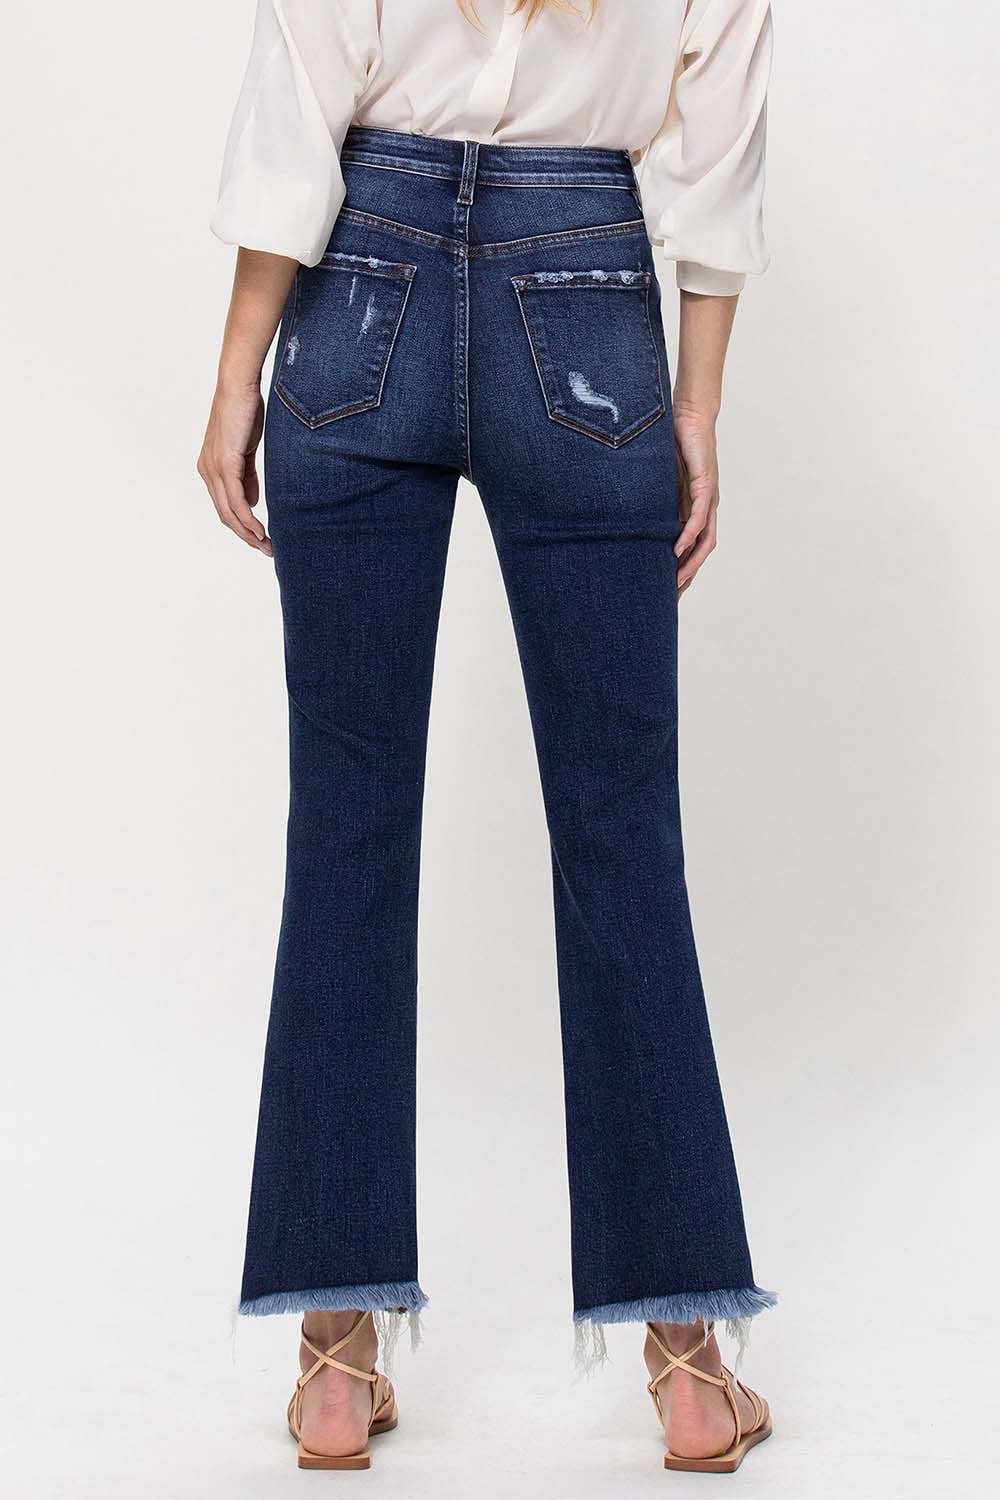 Daylin Jeans